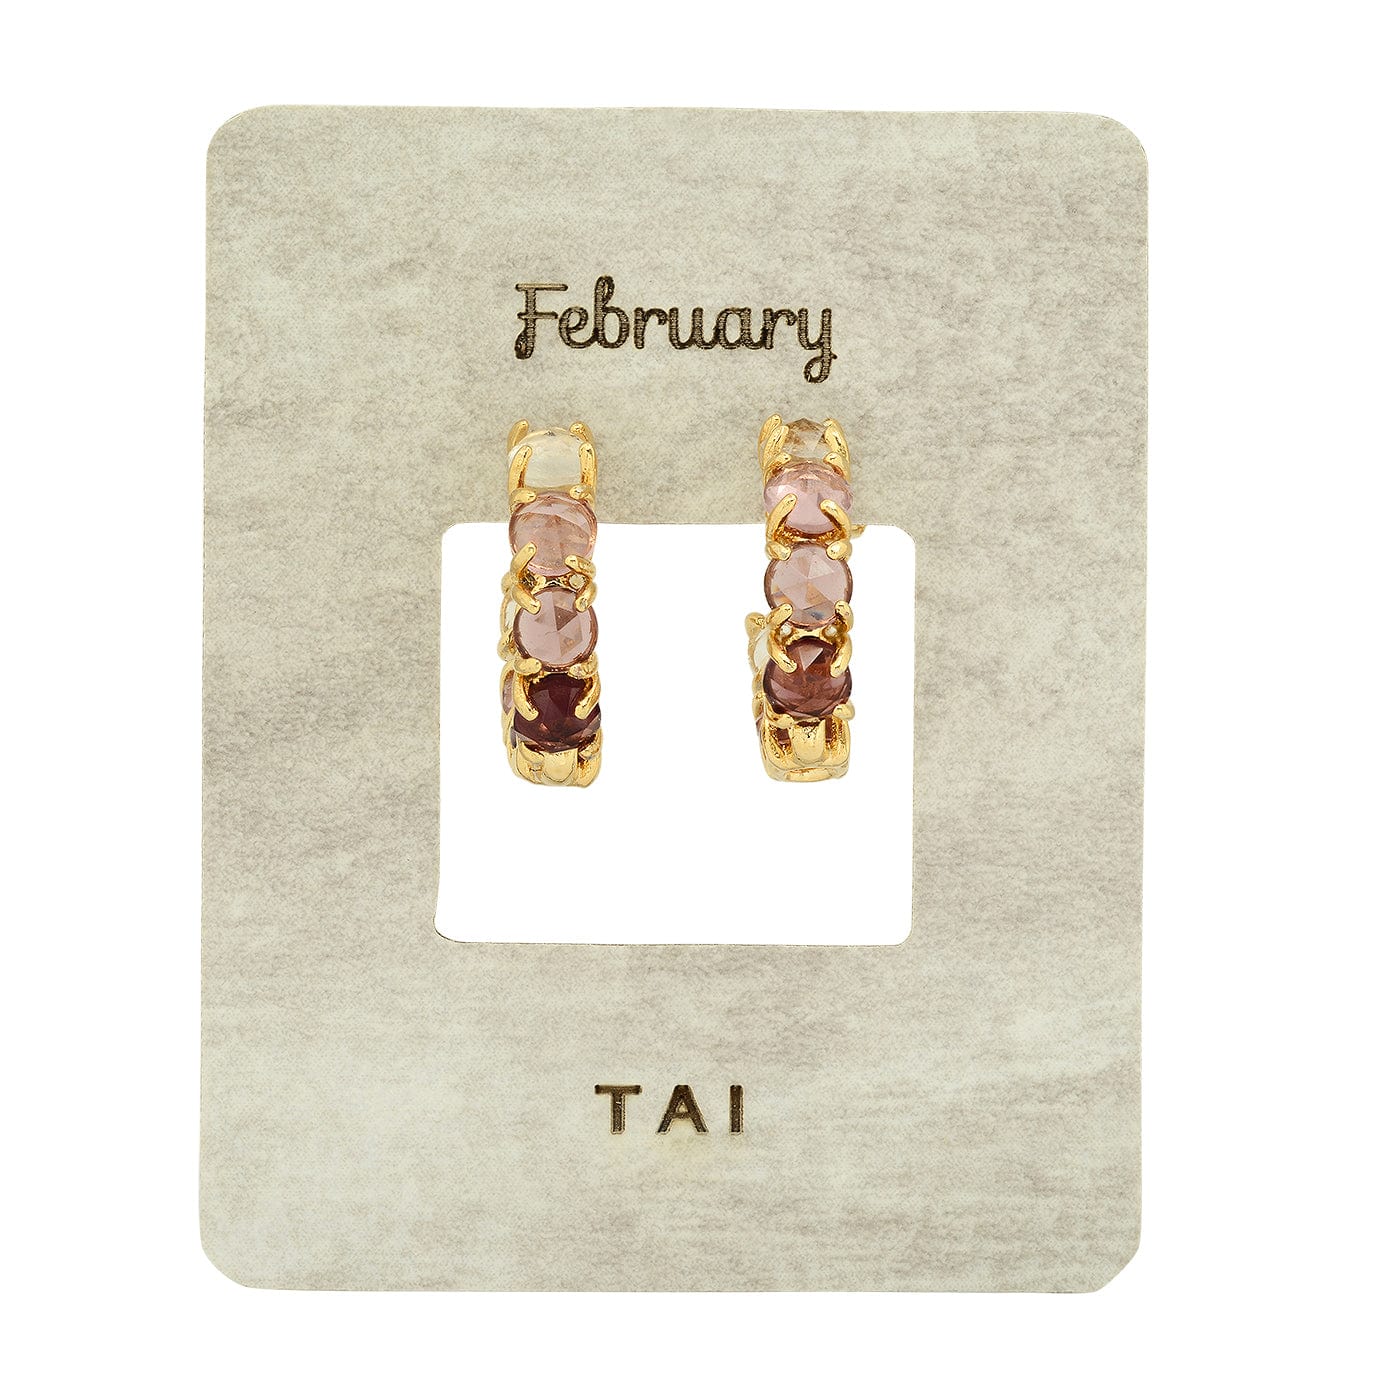 TAI JEWELRY Earrings February Birthstone Huggies